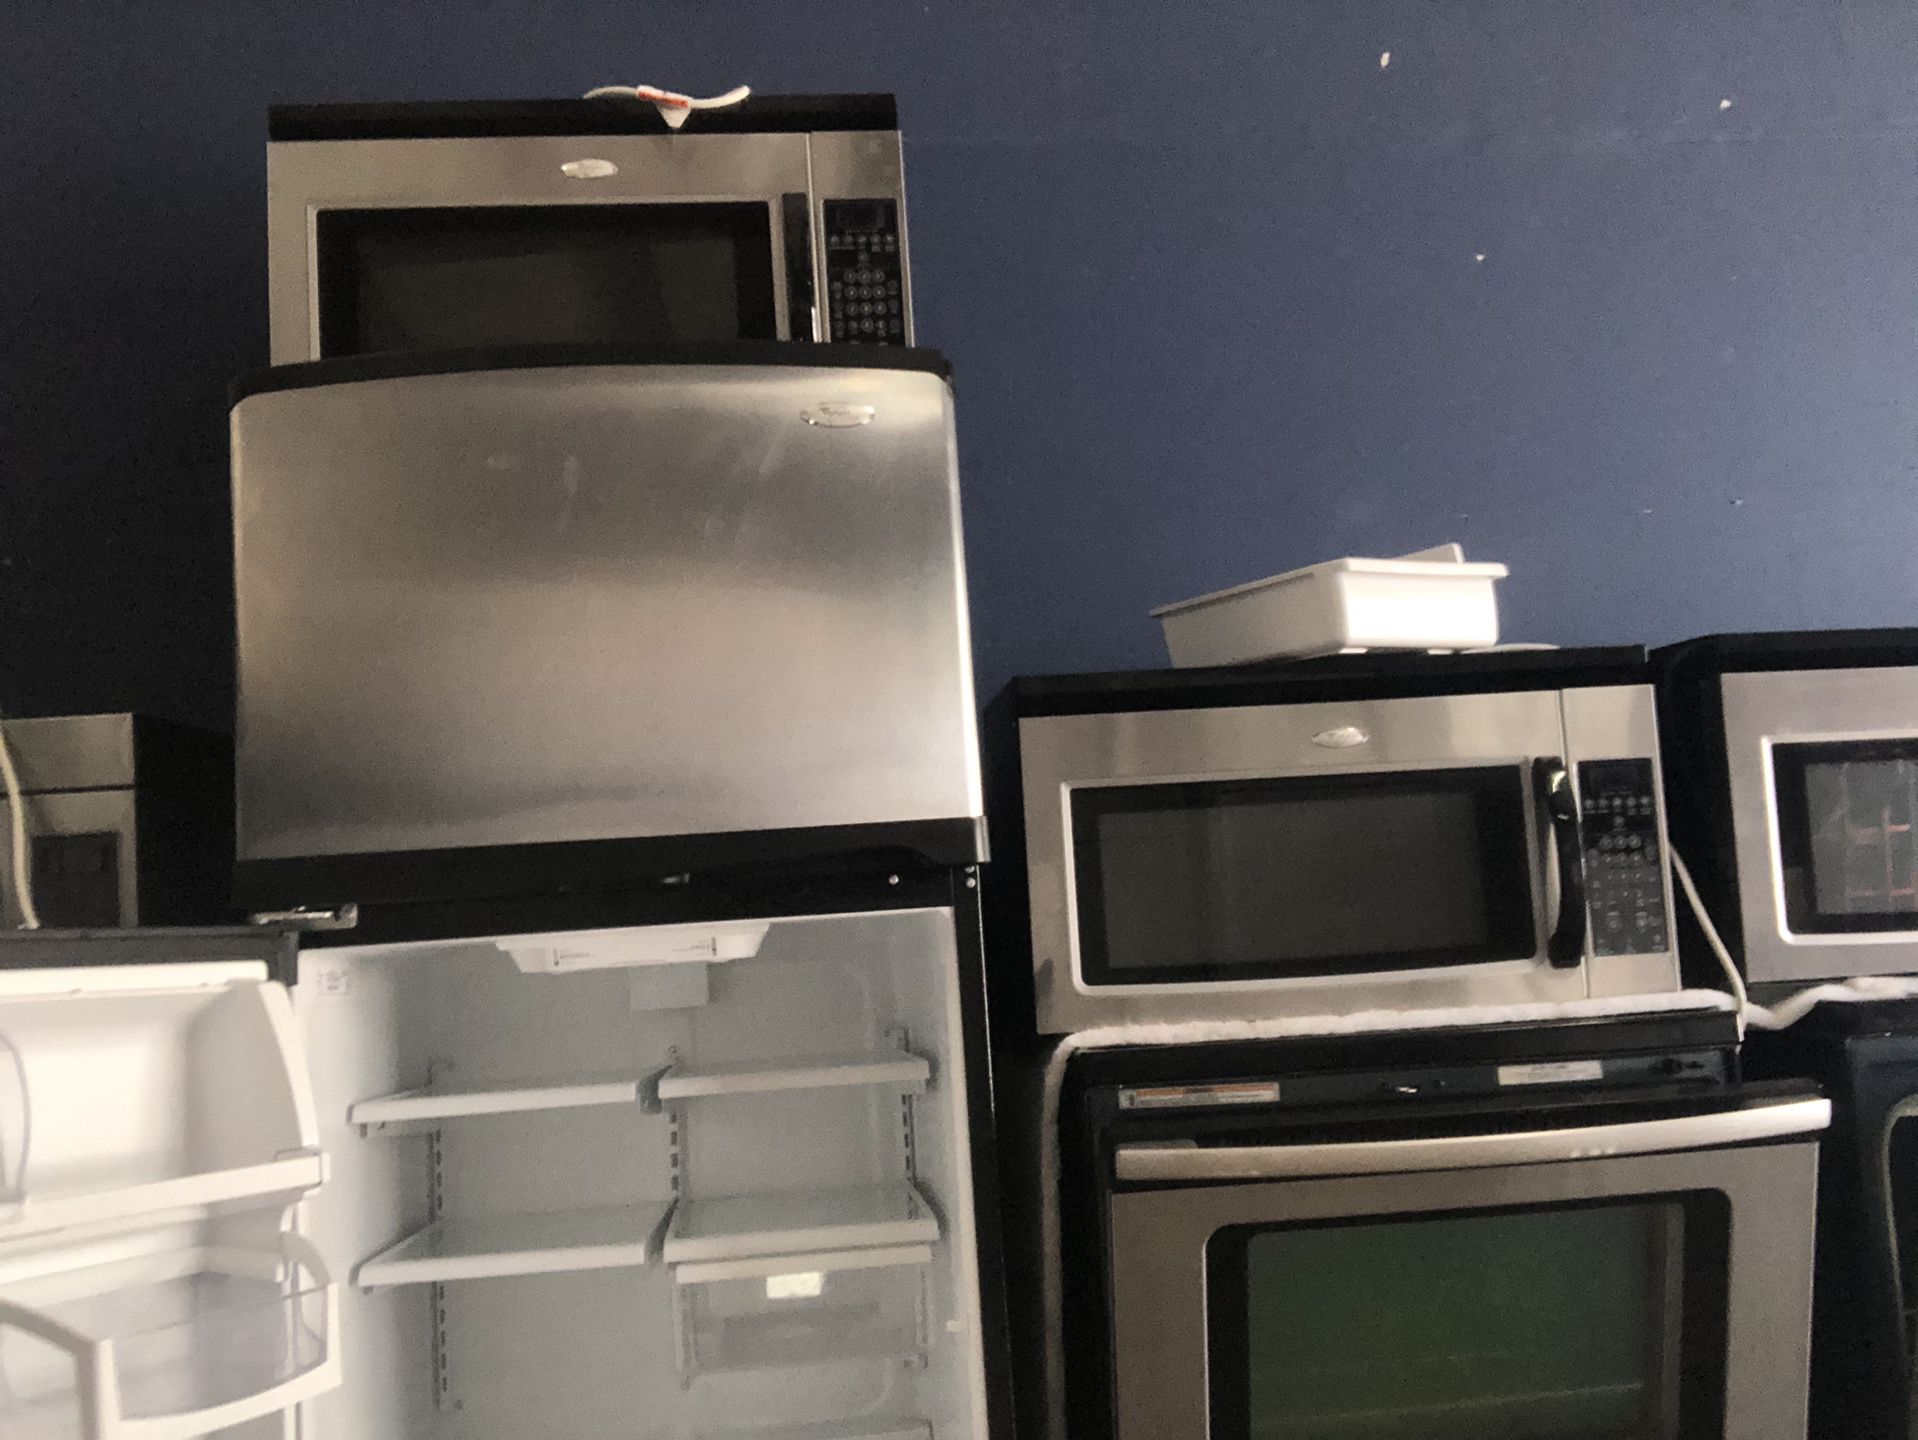 Stainless steel kitchen appliance sets